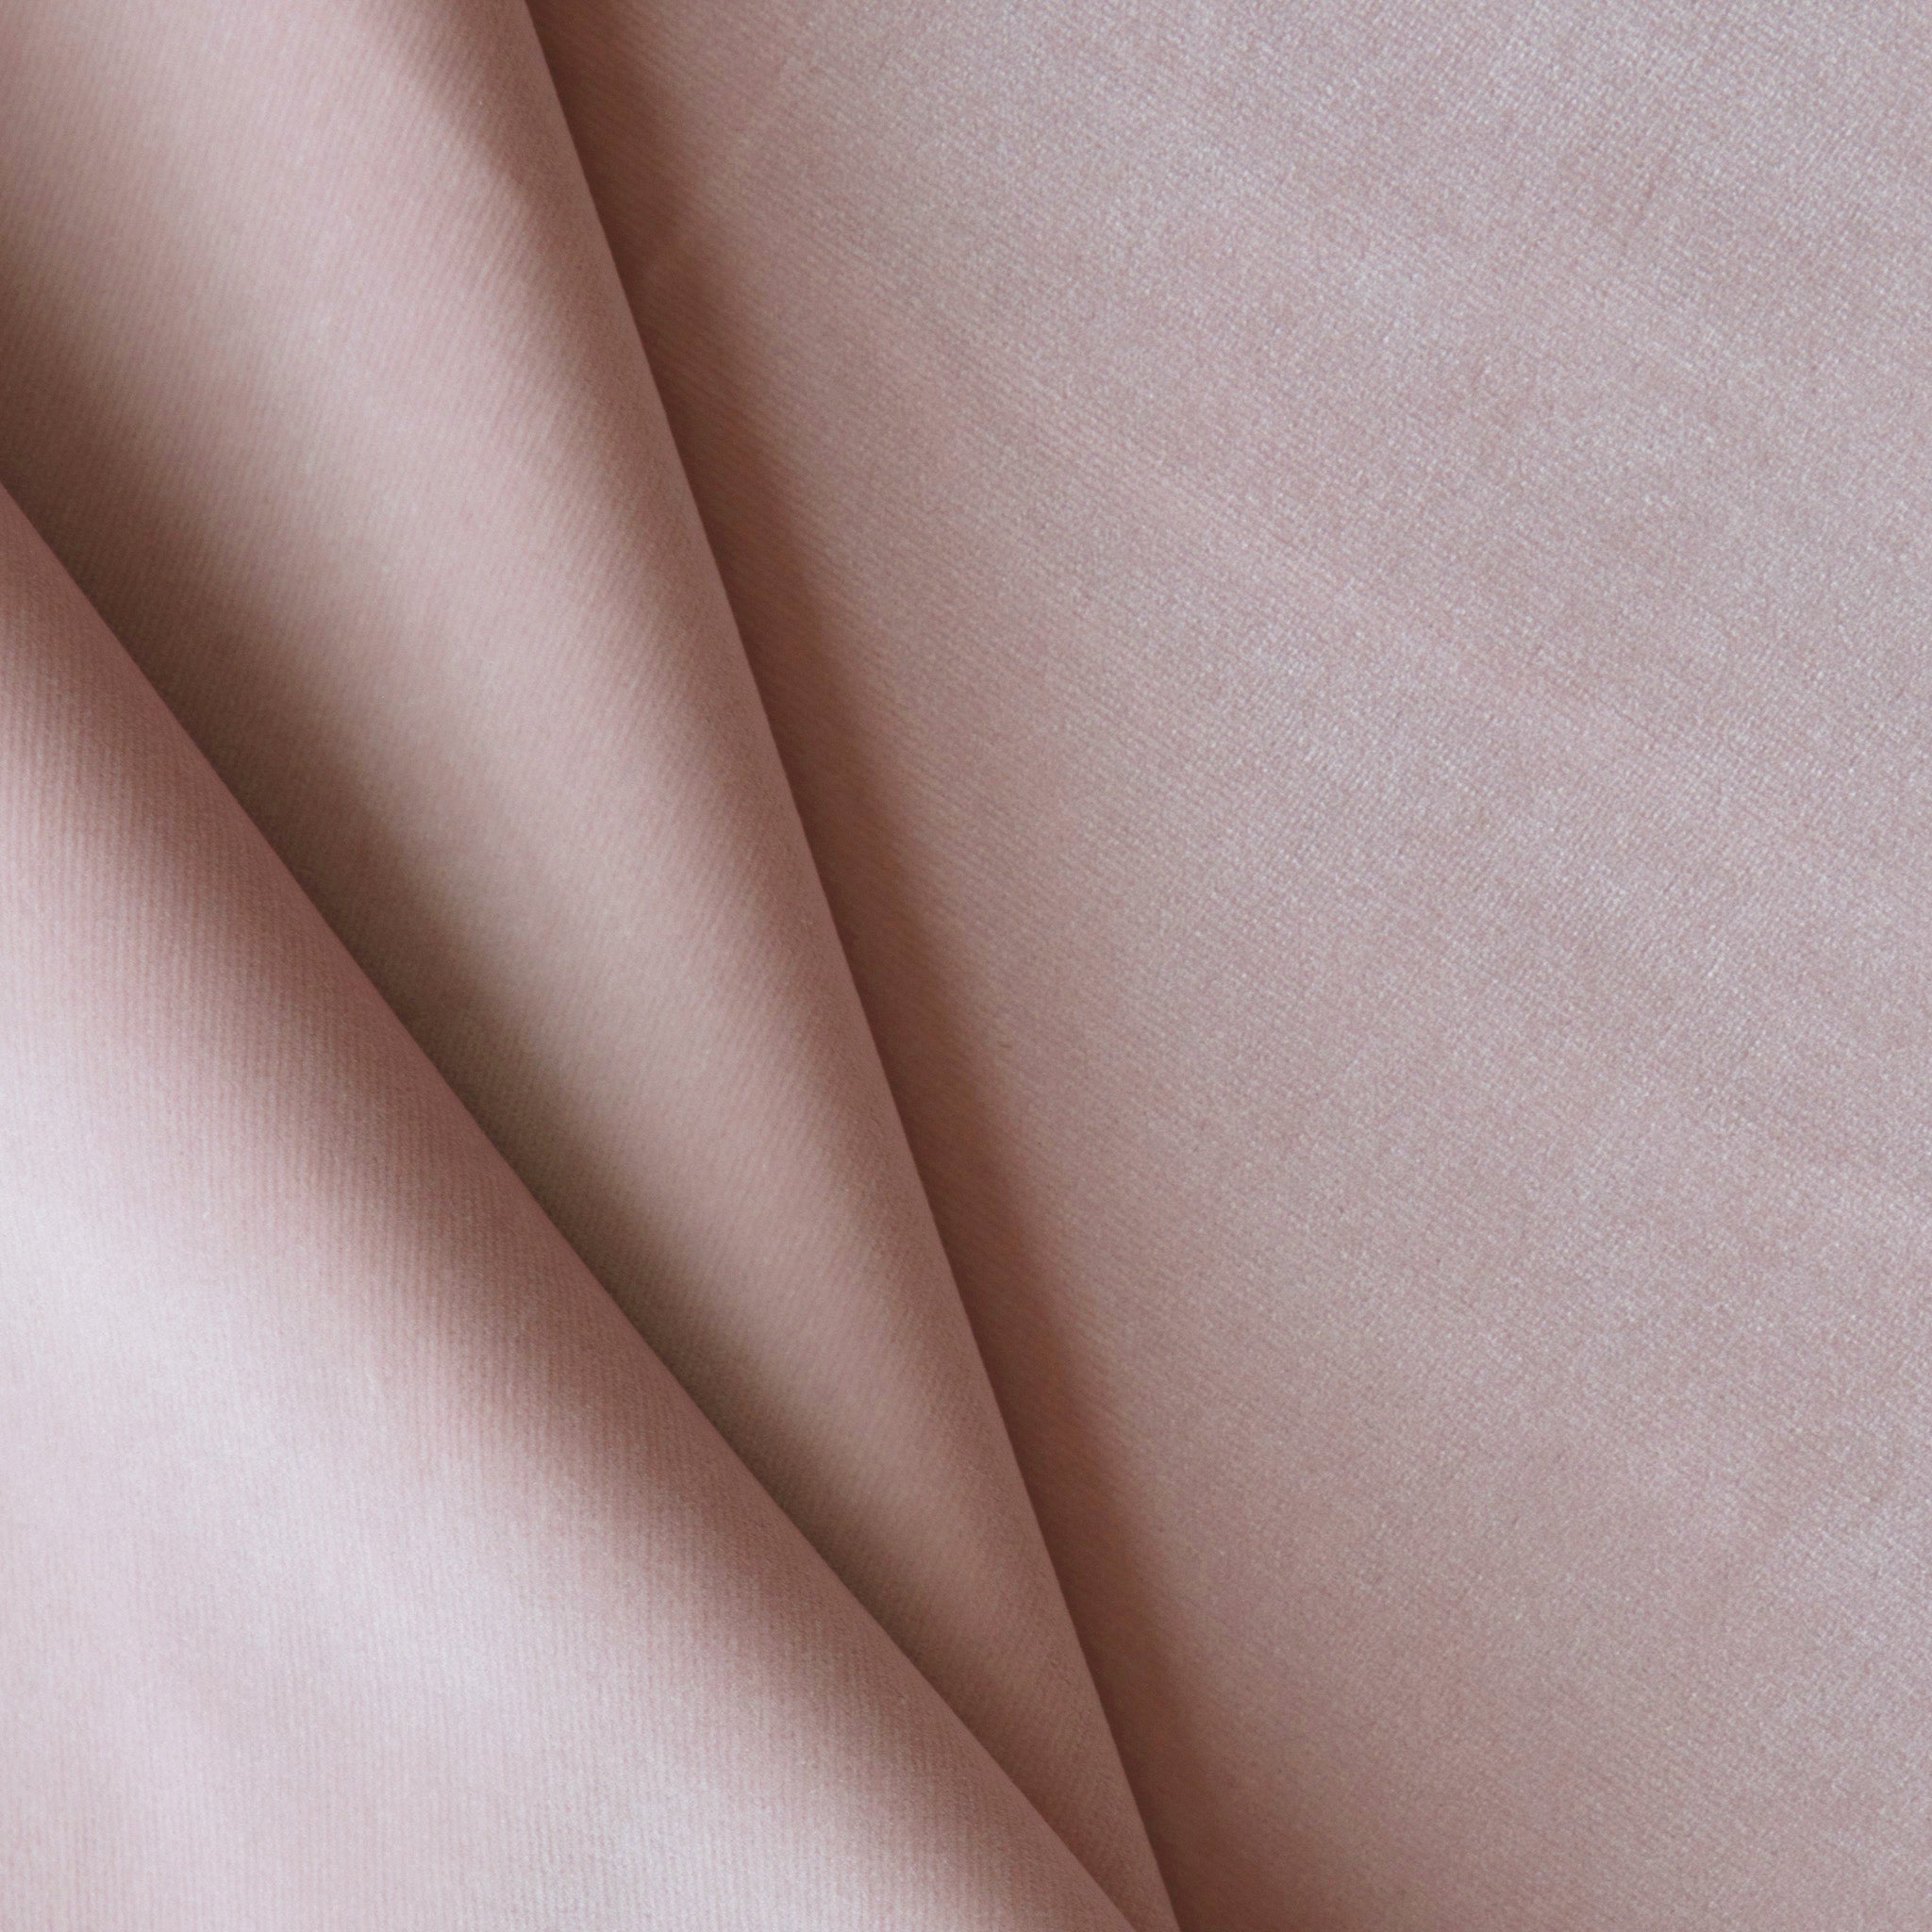 Mauve Velvet Fabric Close-Up